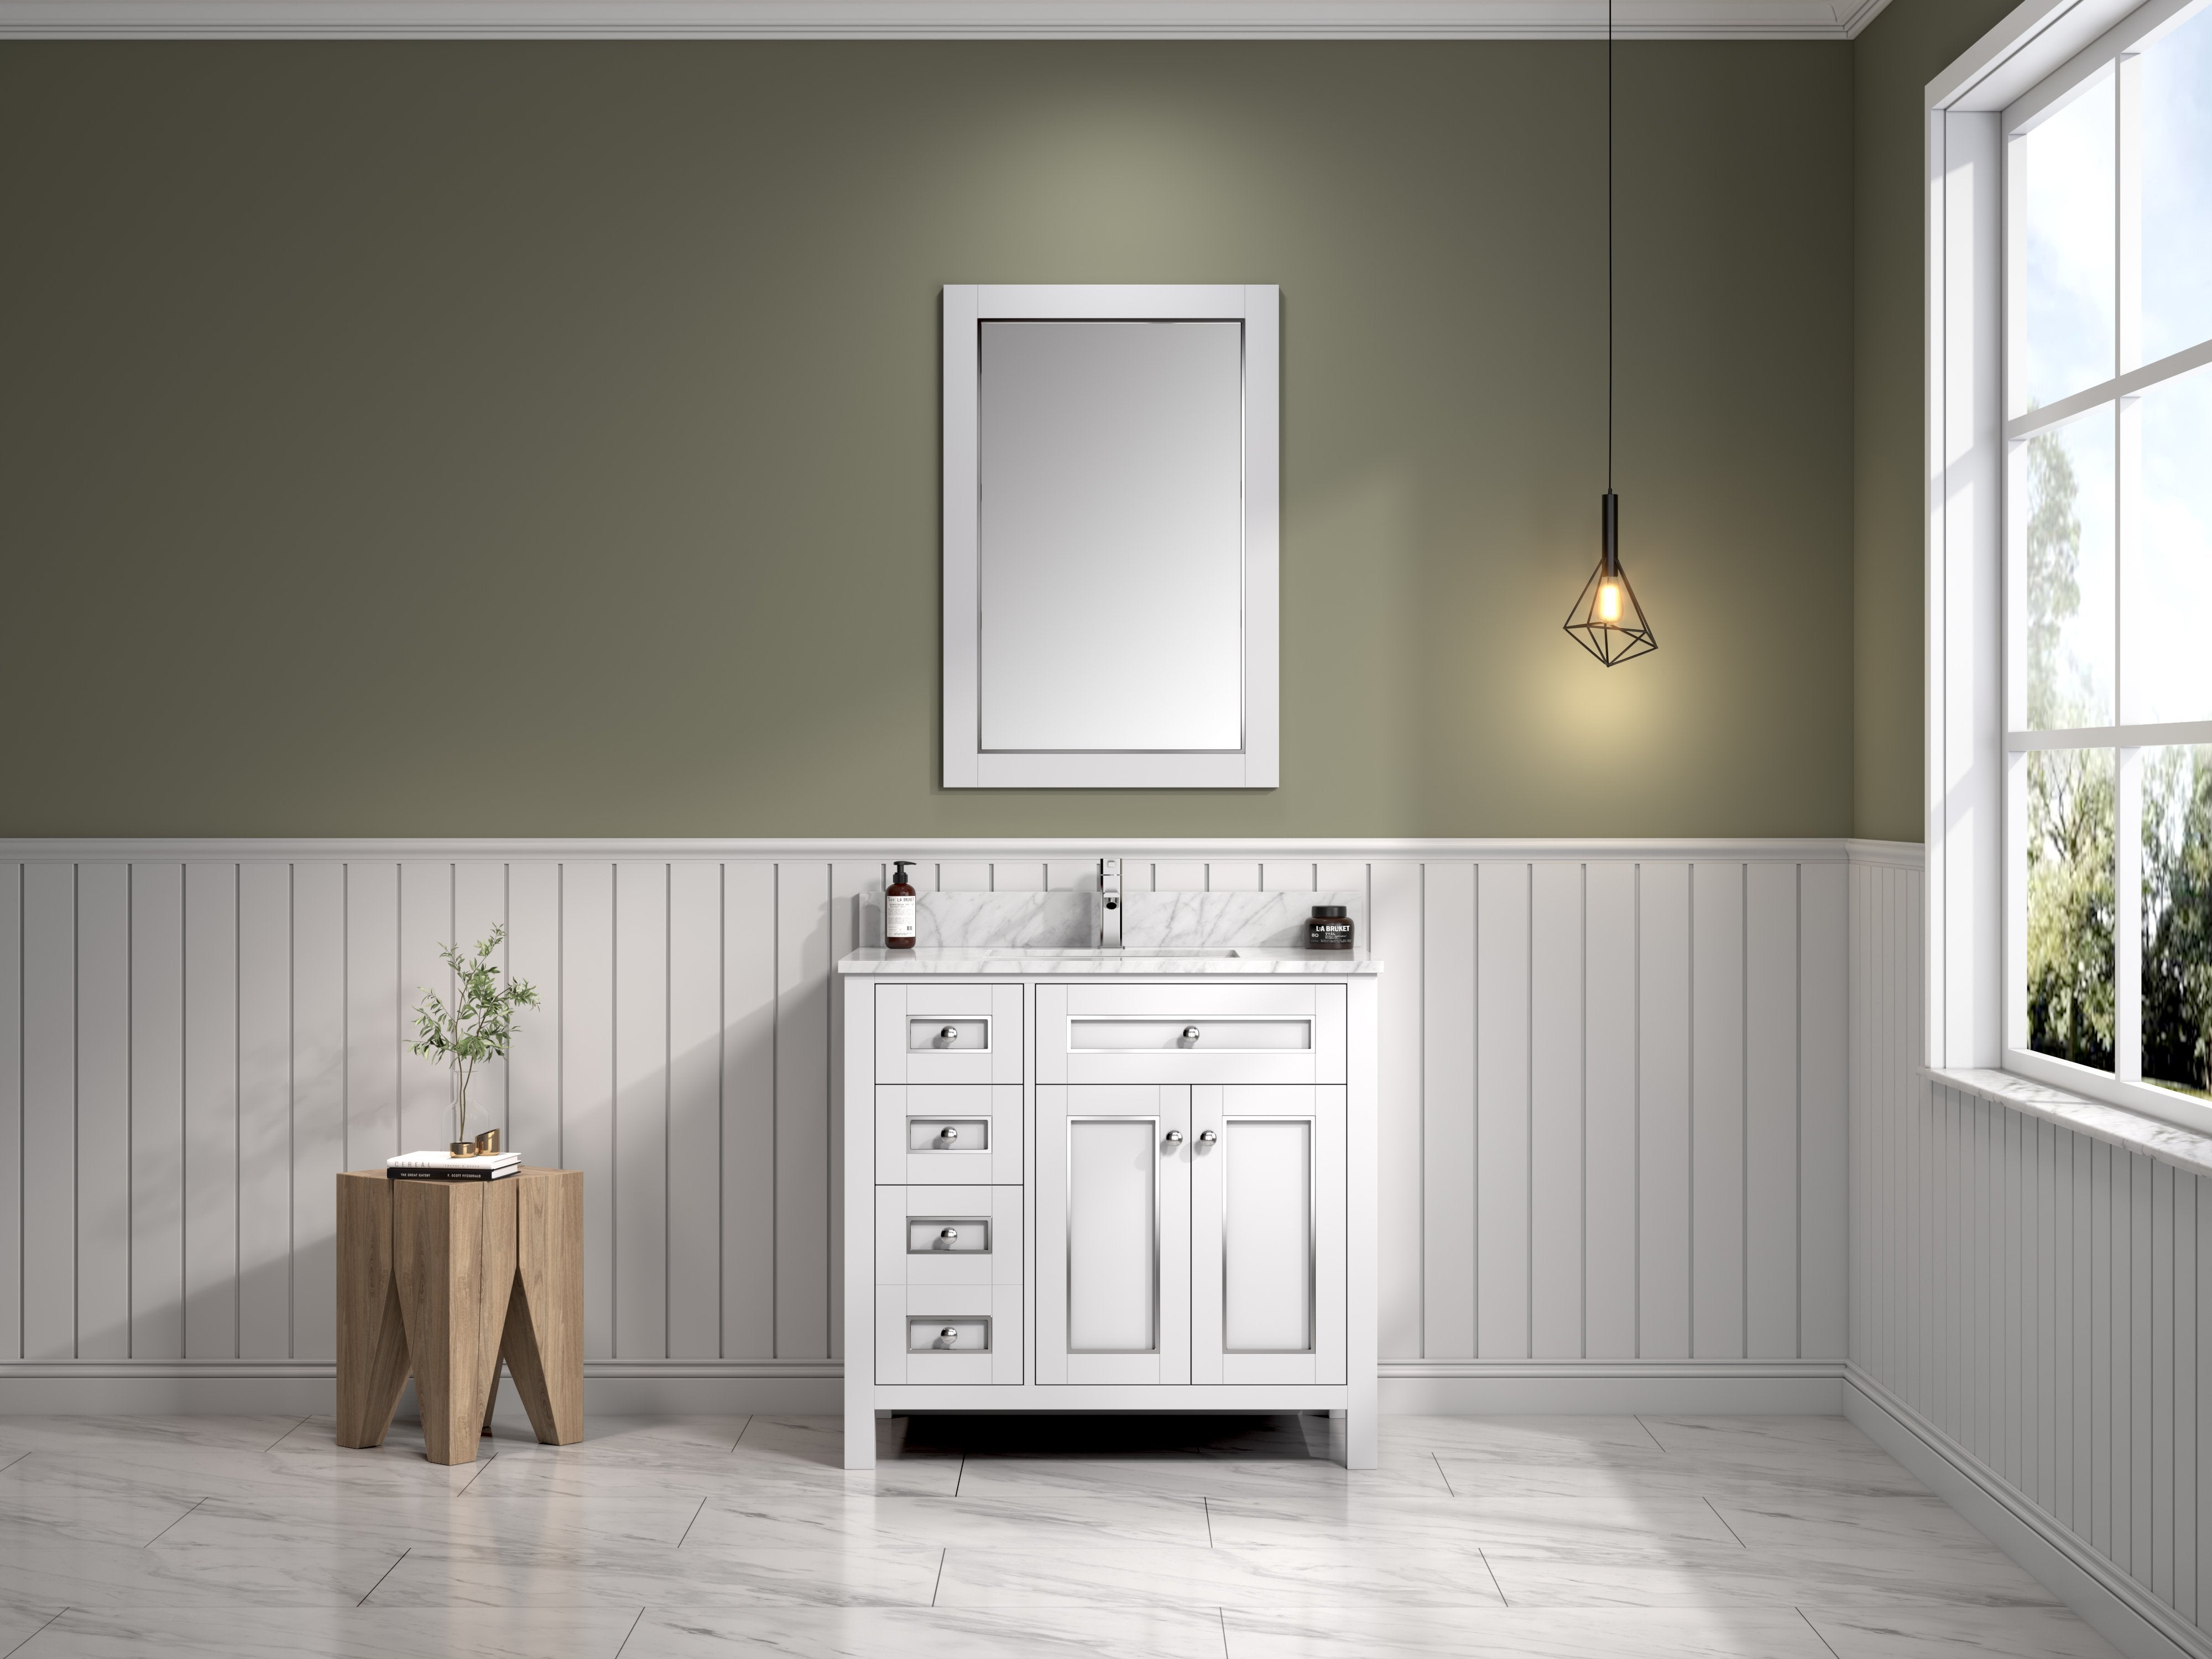 24"x36" Bathroom Mirror - East Shore Modern Home Furnishings